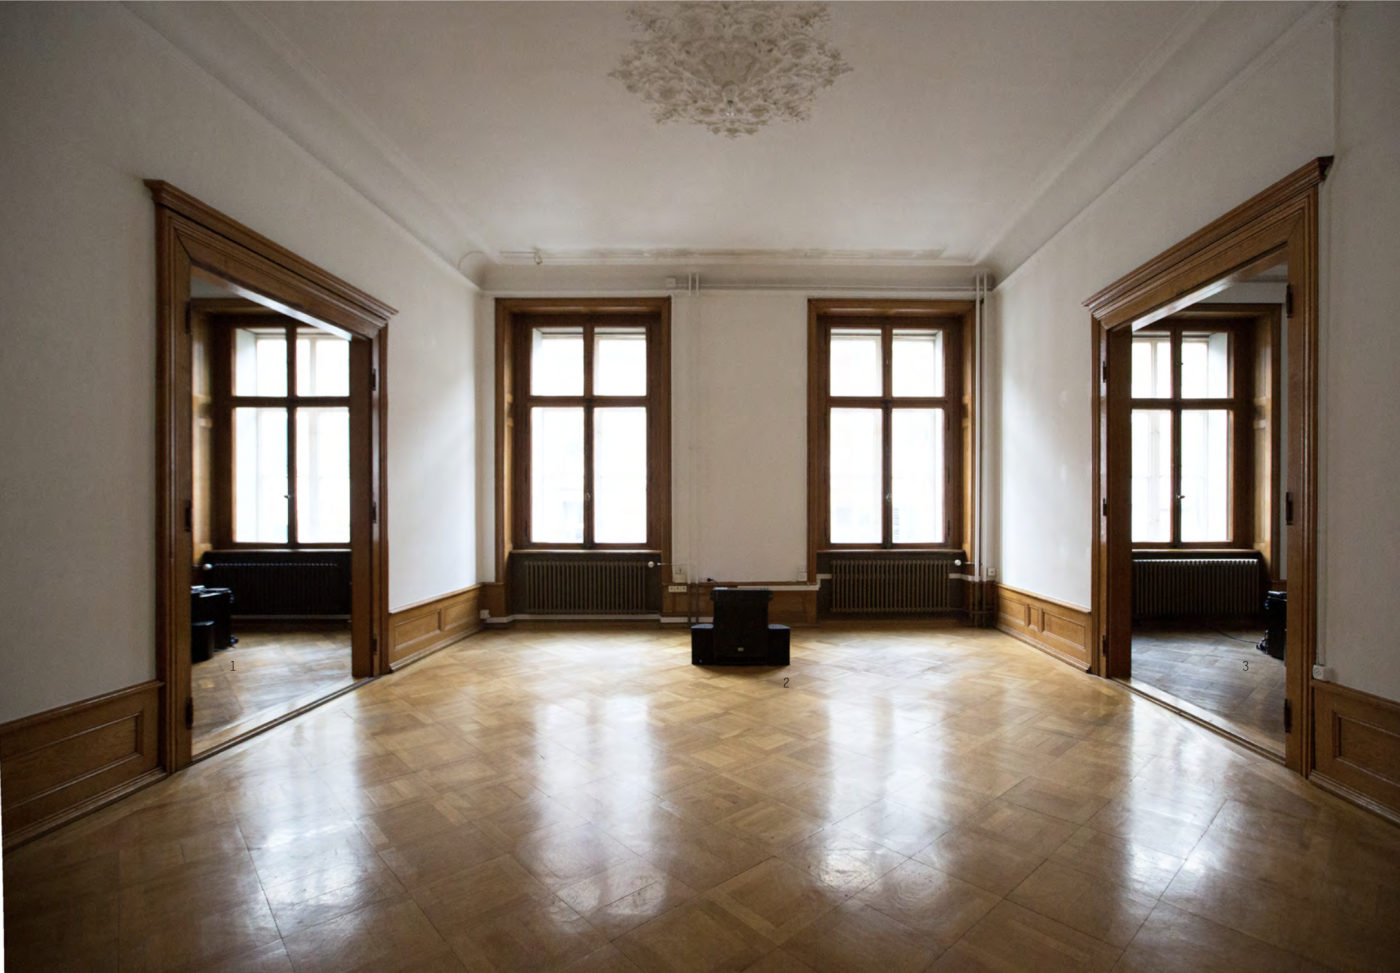 Daniel Gustav Cramer, Coasts, 2016. Six sound systems inside a floor of a house. Installation view Art Basel Parcours, Switzerland
